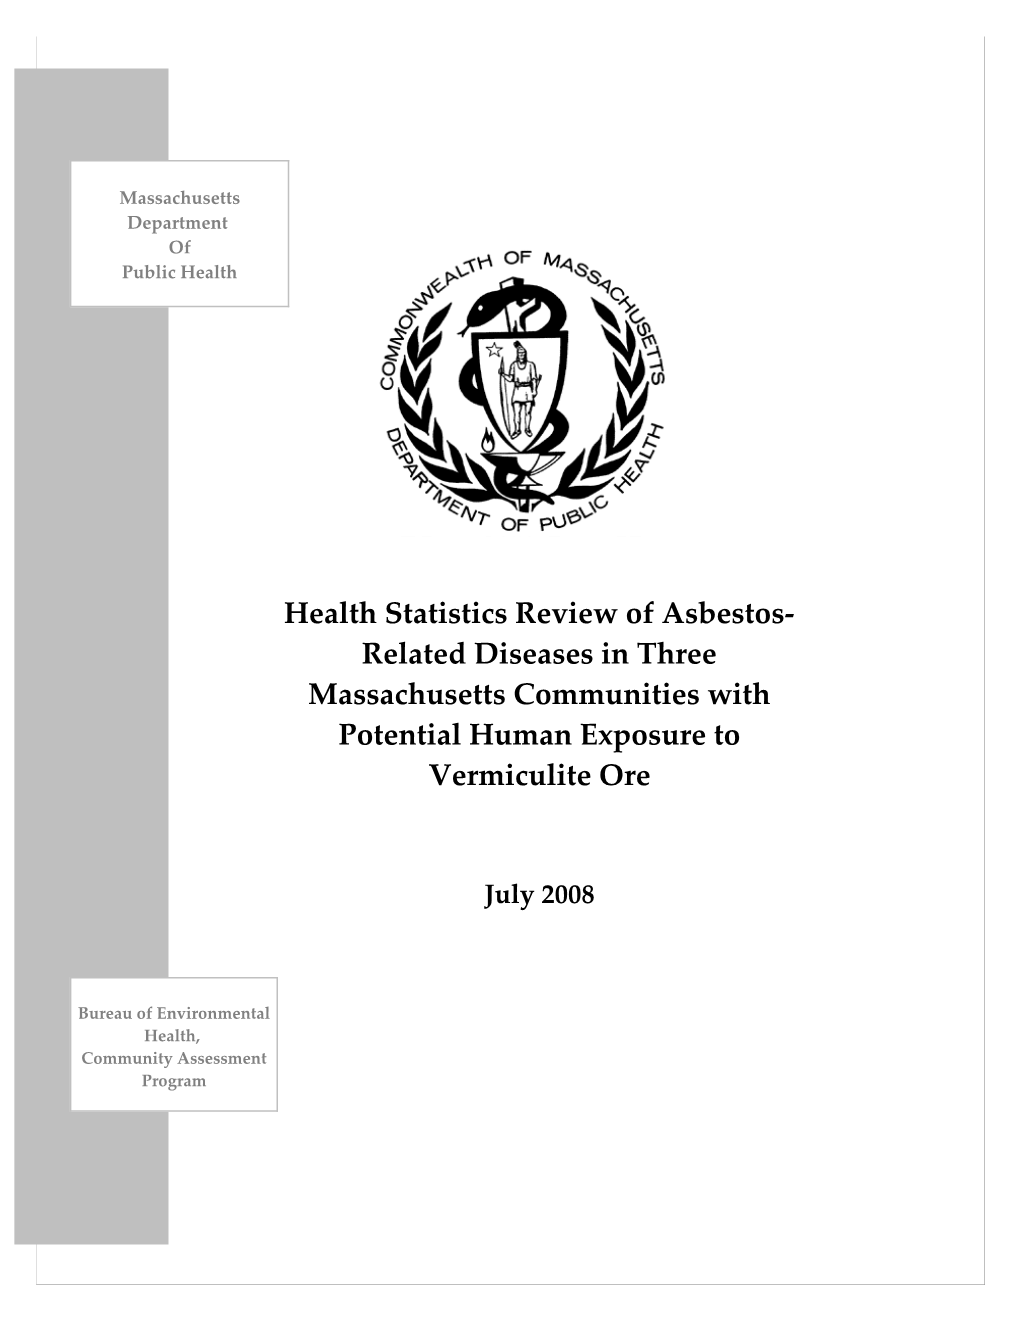 Health Statistics Review of Asbestos-Related Diseases in Three Massachusetts Communities